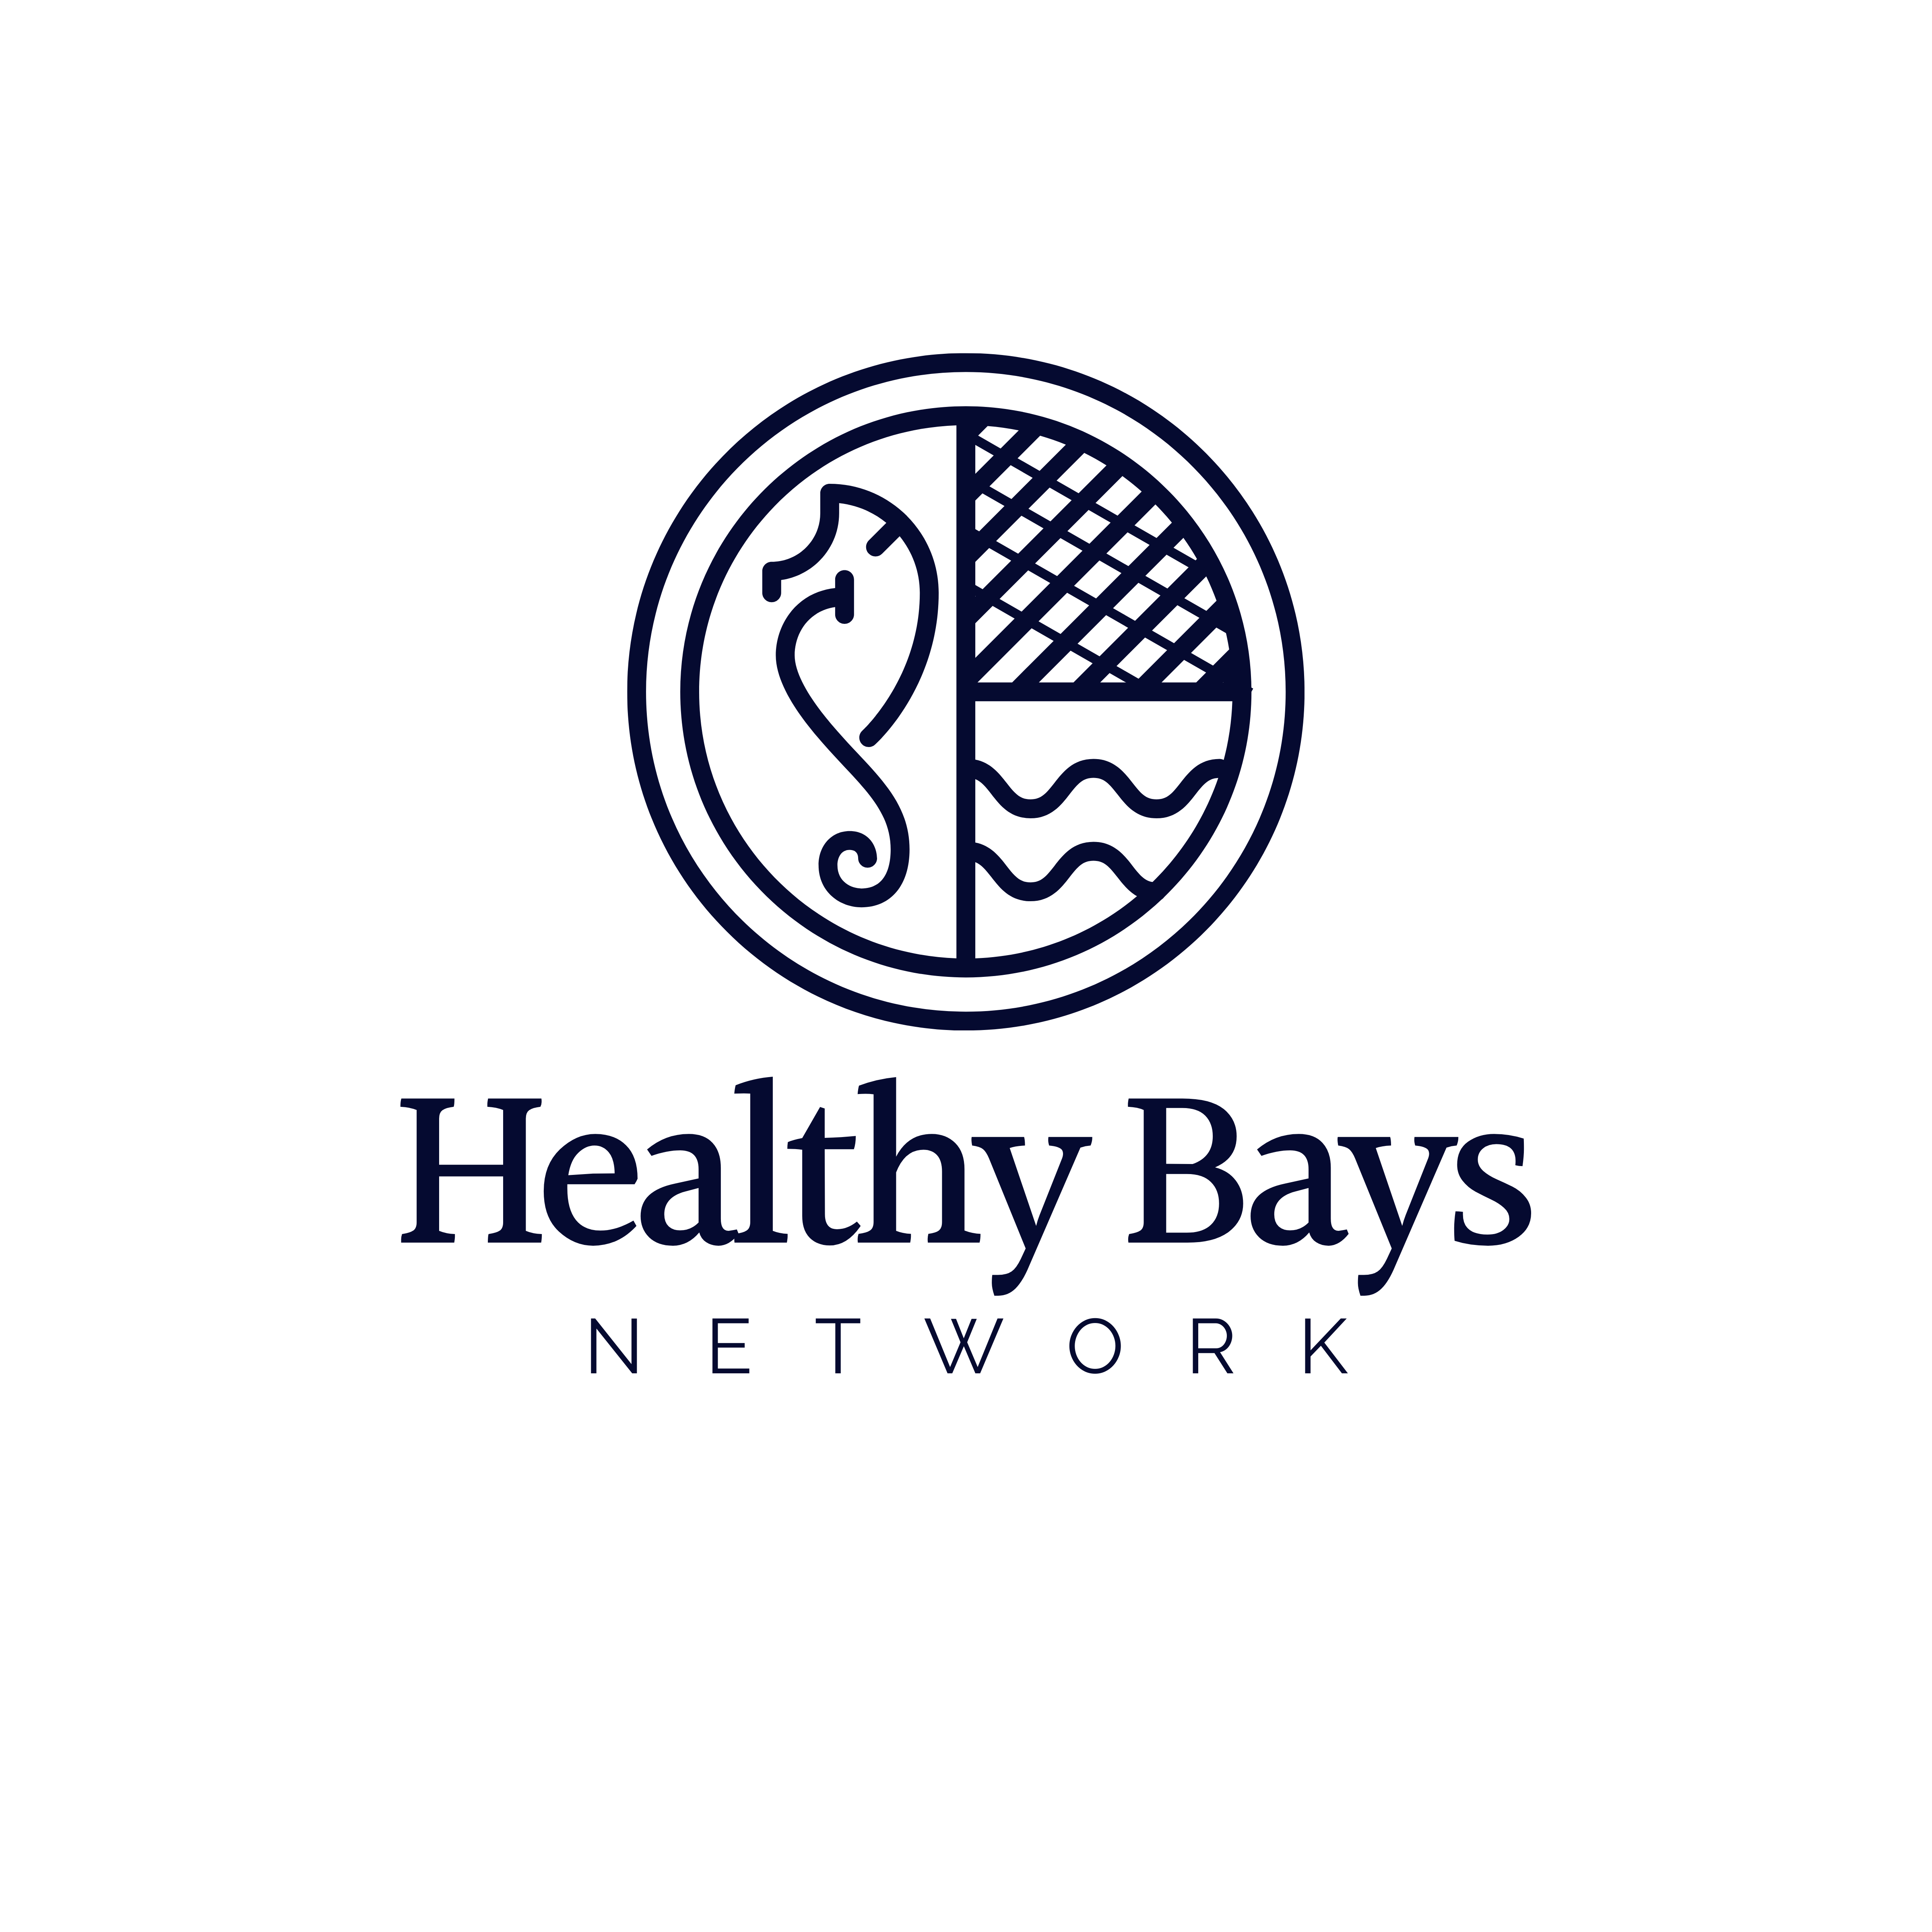 Healthy Bays Network logo